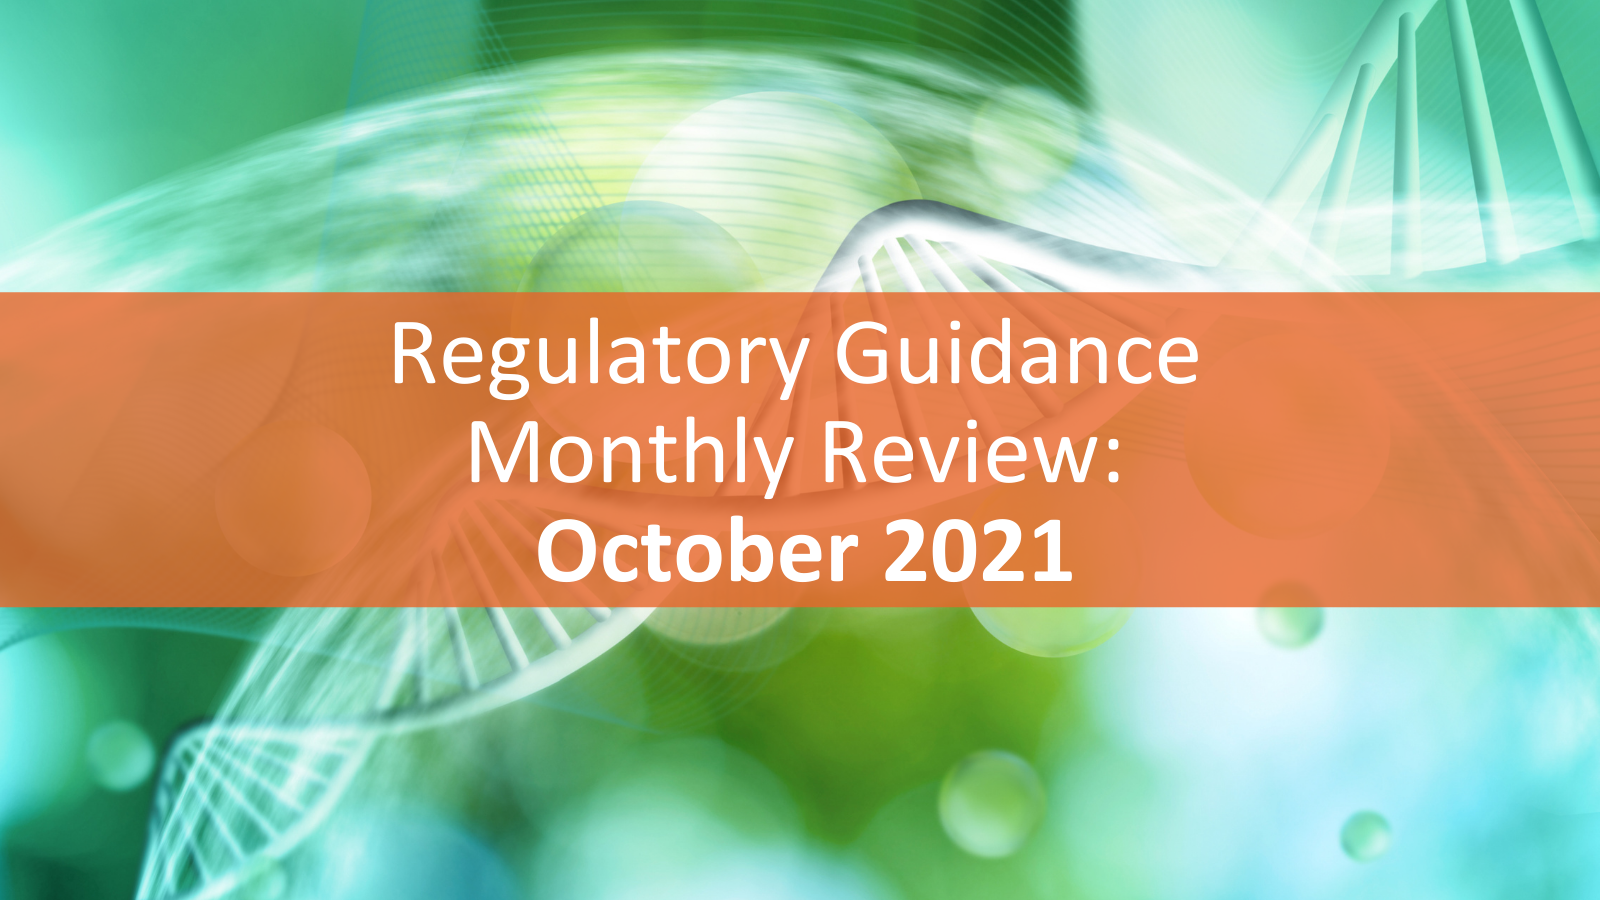 Regulatory Guidance Monthly Review - Oct 2021